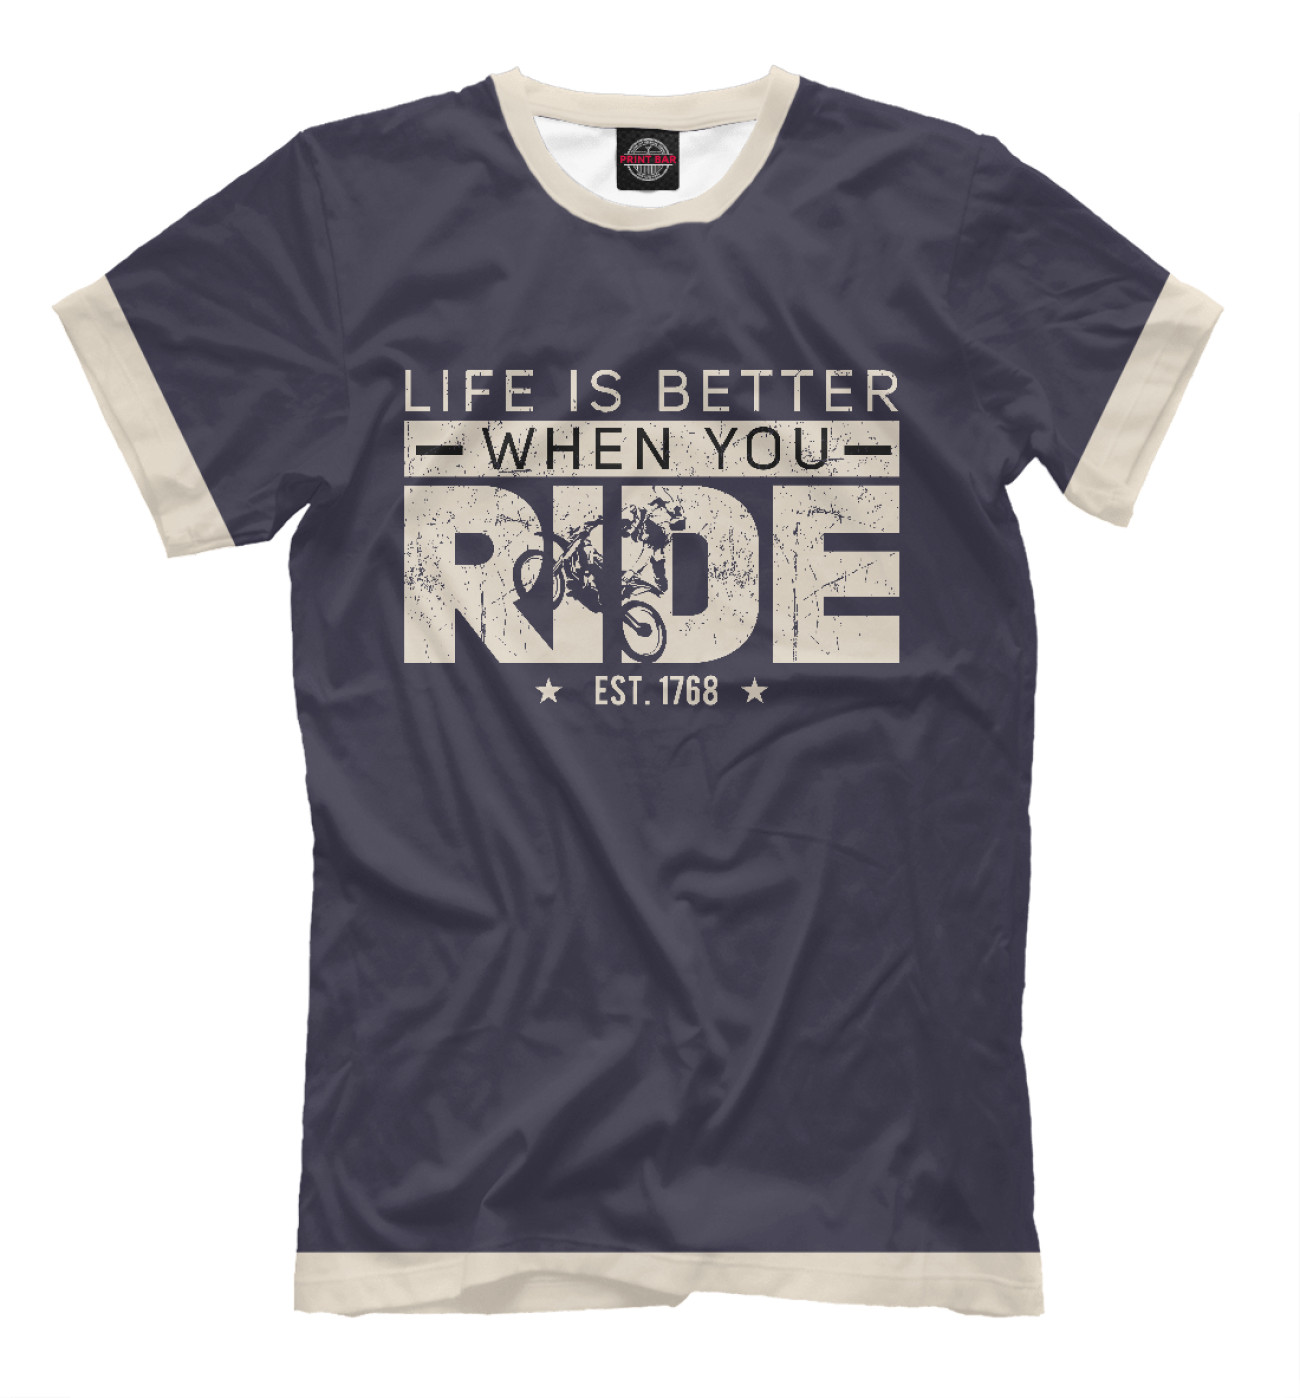 Мужская Футболка Life is better when you ride, артикул: MTR-821679-fut-2